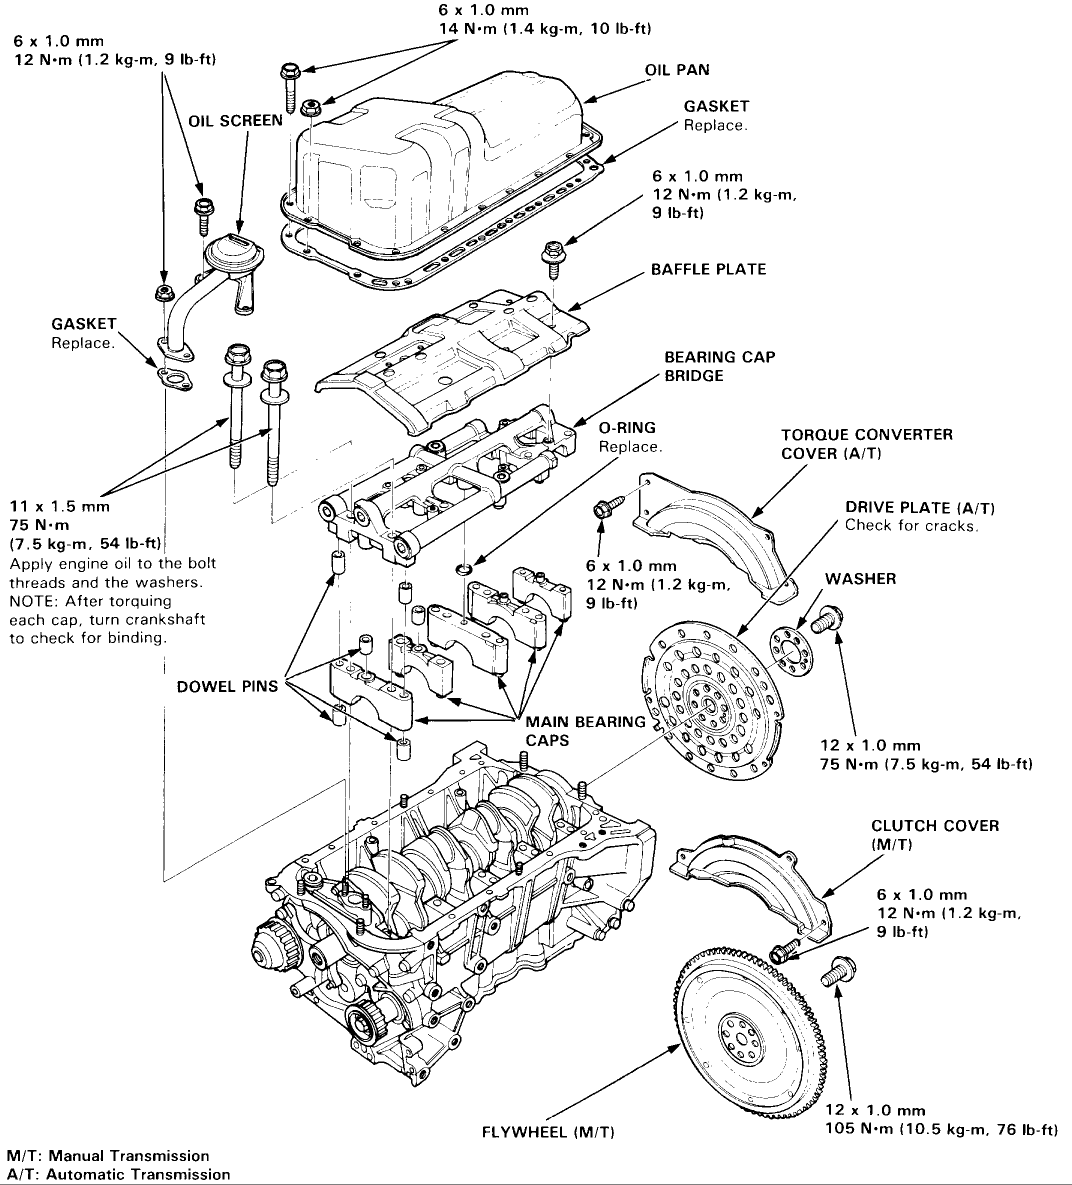 Honda Accord Engine Diagram. Diagrams: Engine parts layouts